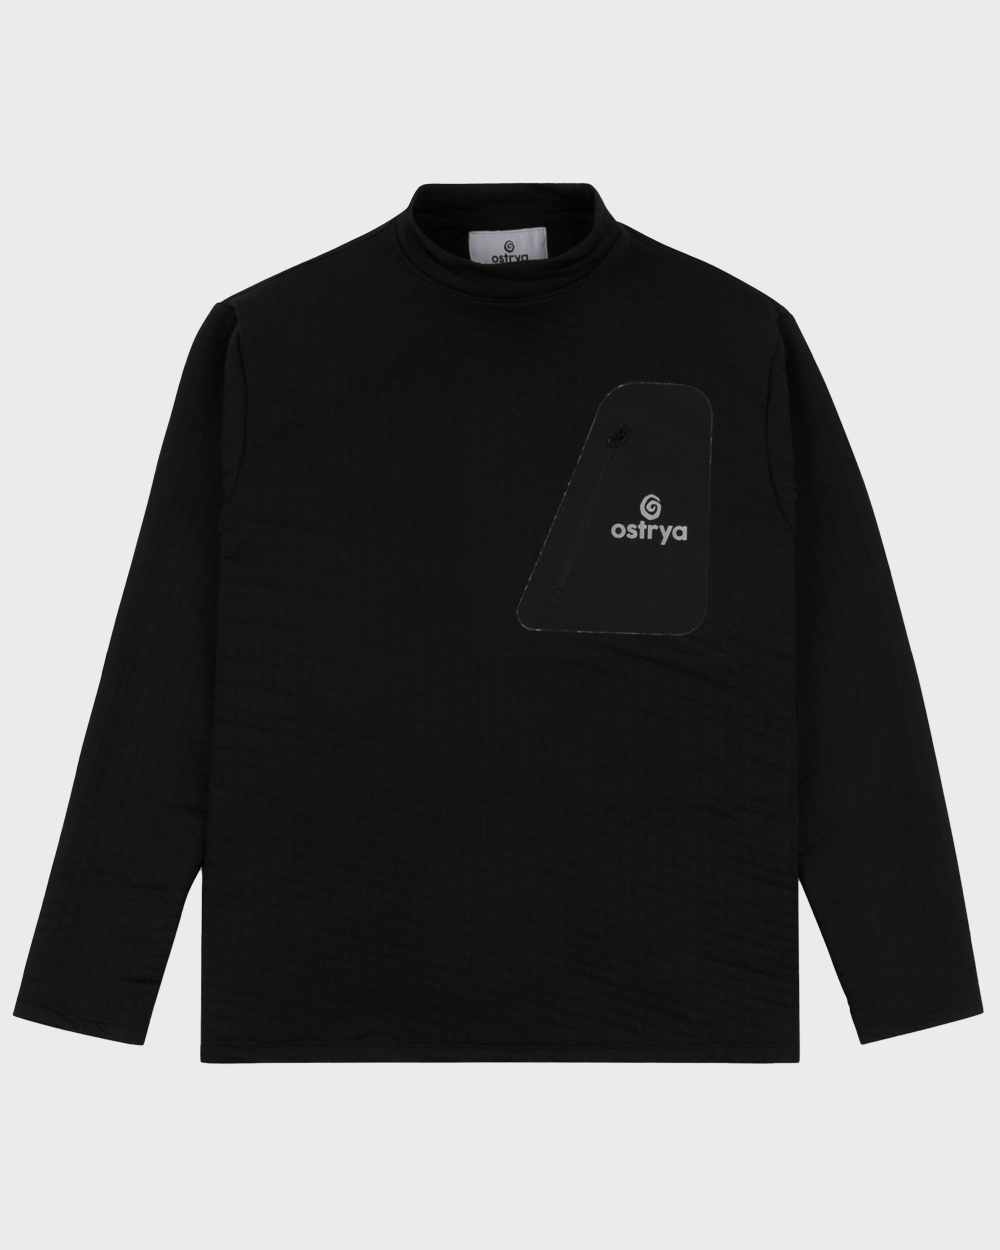 OSTRYA Tessellate Fleece Sweater (Black)